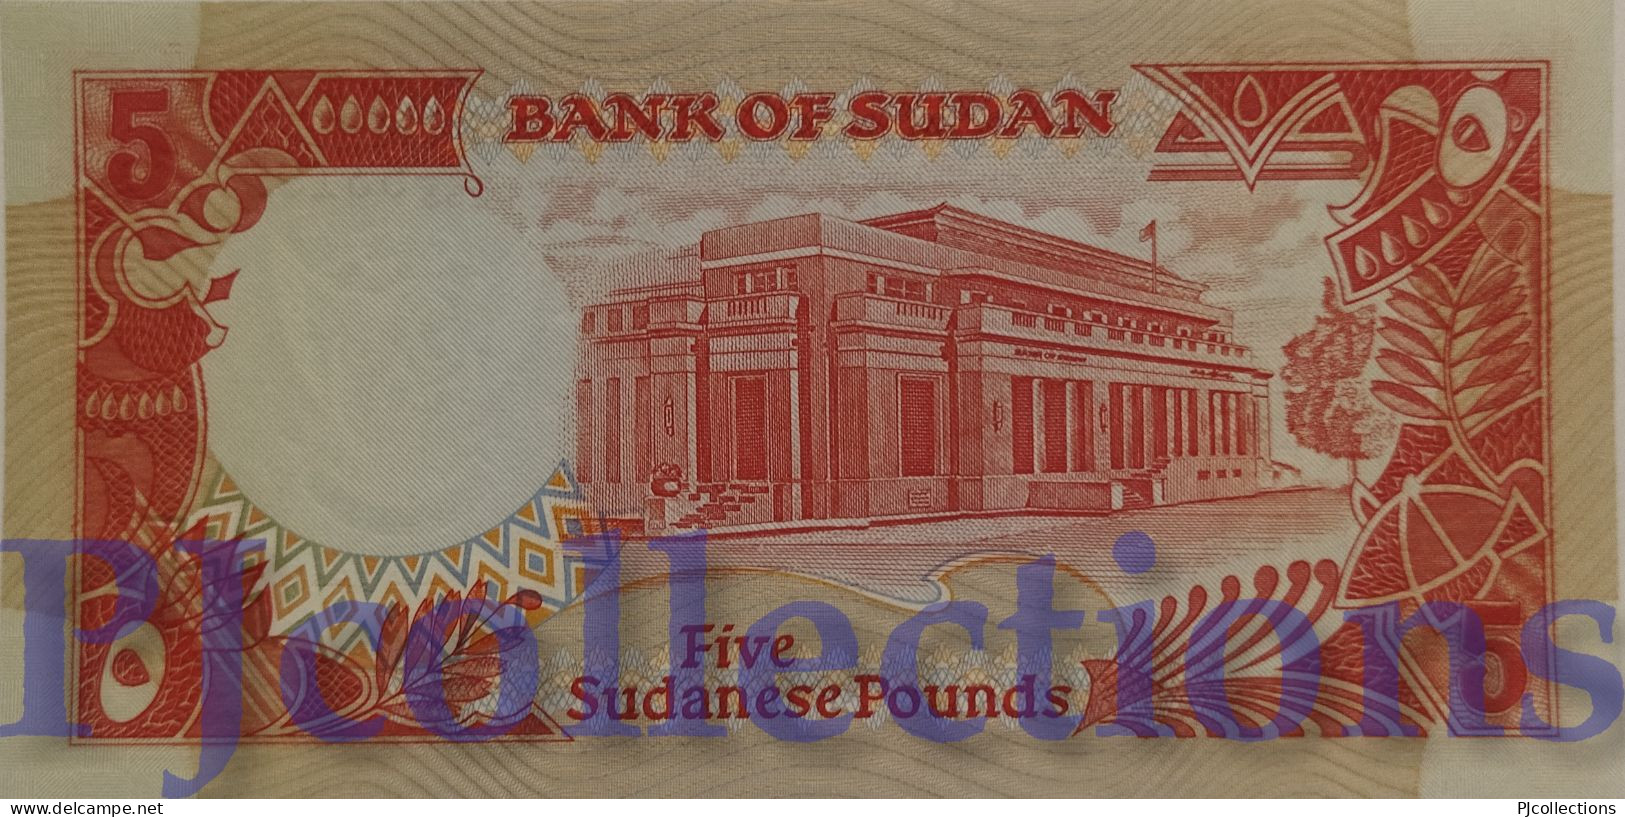 SUDAN 5 POUNDS 1991 PICK 45 AUNC - Soudan